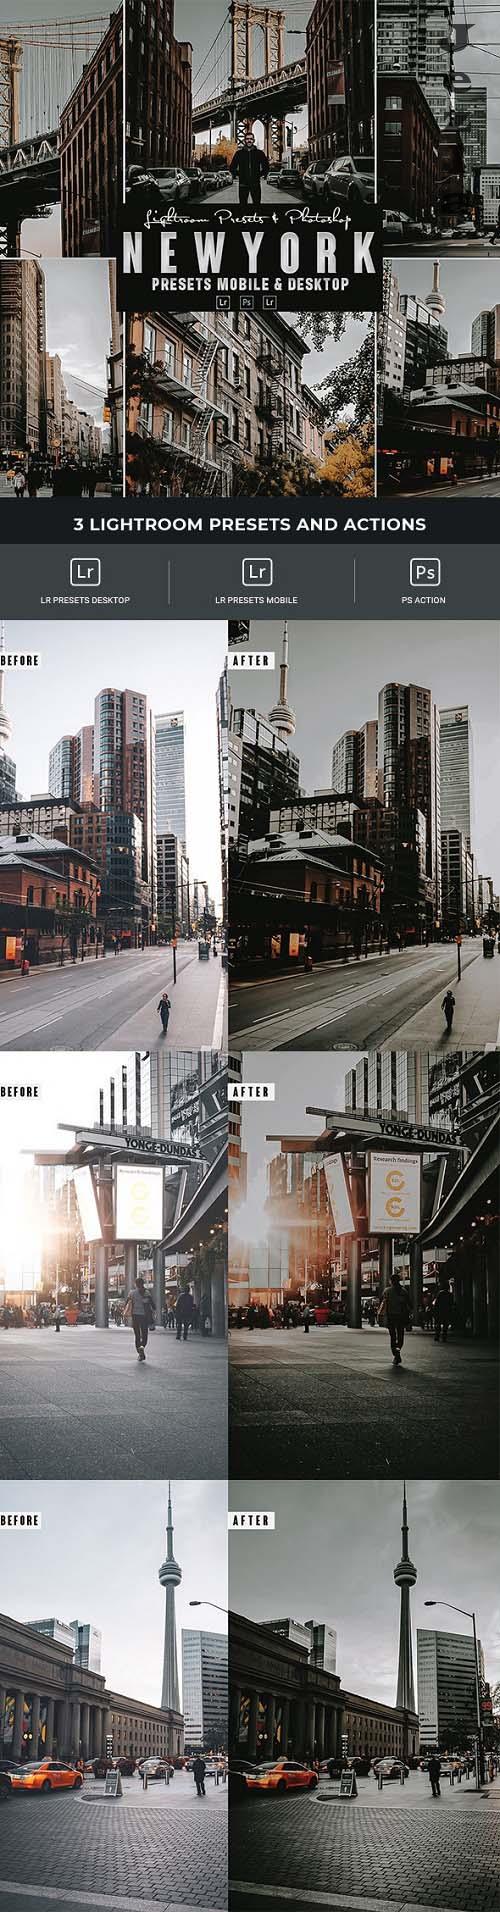 Newyork Photoshop Action & Lightrom Presets - 34508497